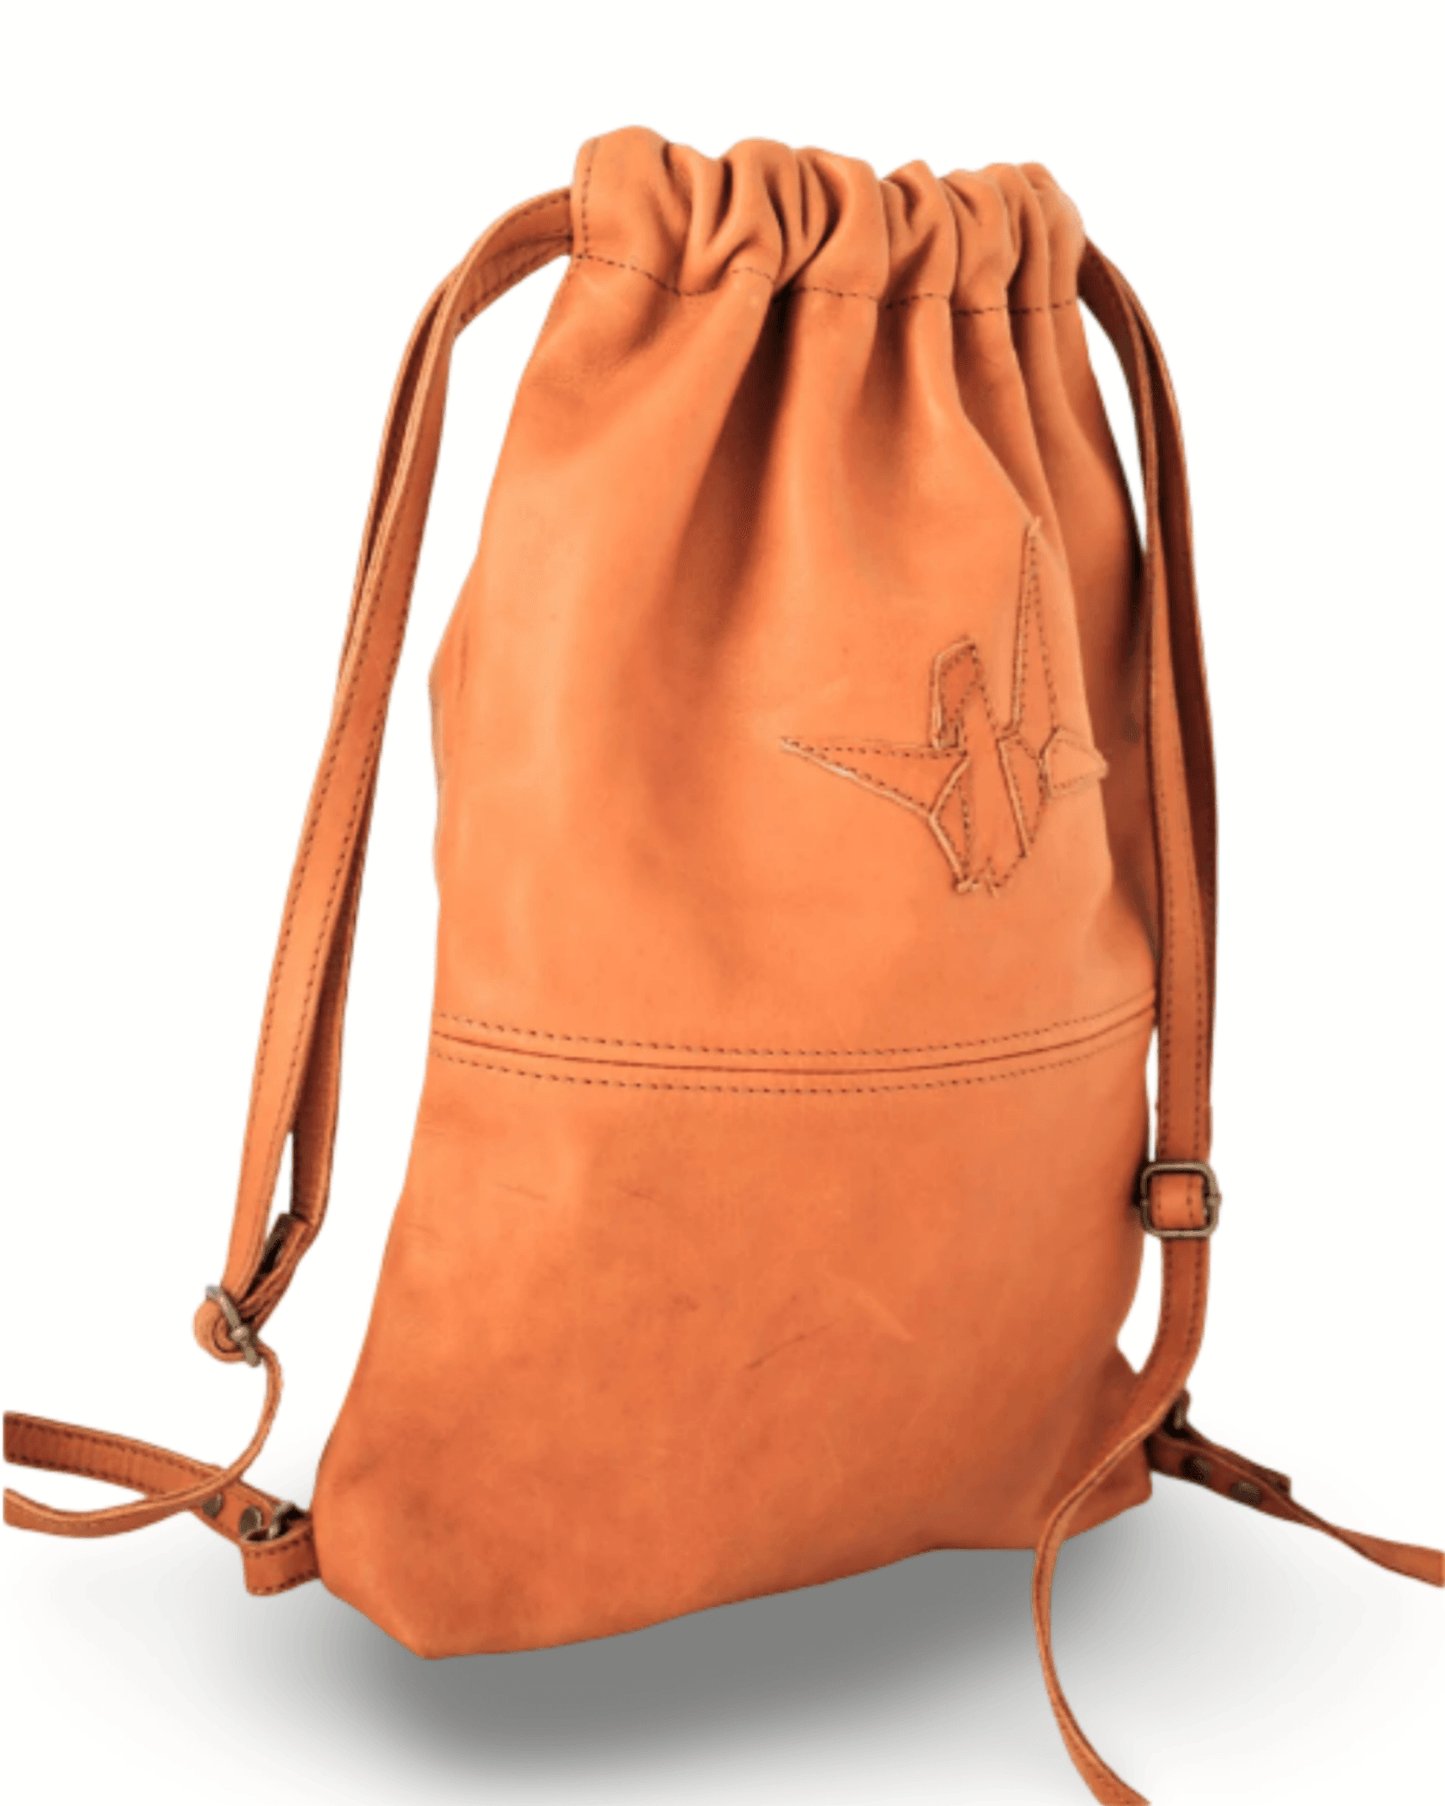 Origami Crane Inspired Leather Drawstring Backpack - ORIEN VIN TIQUE